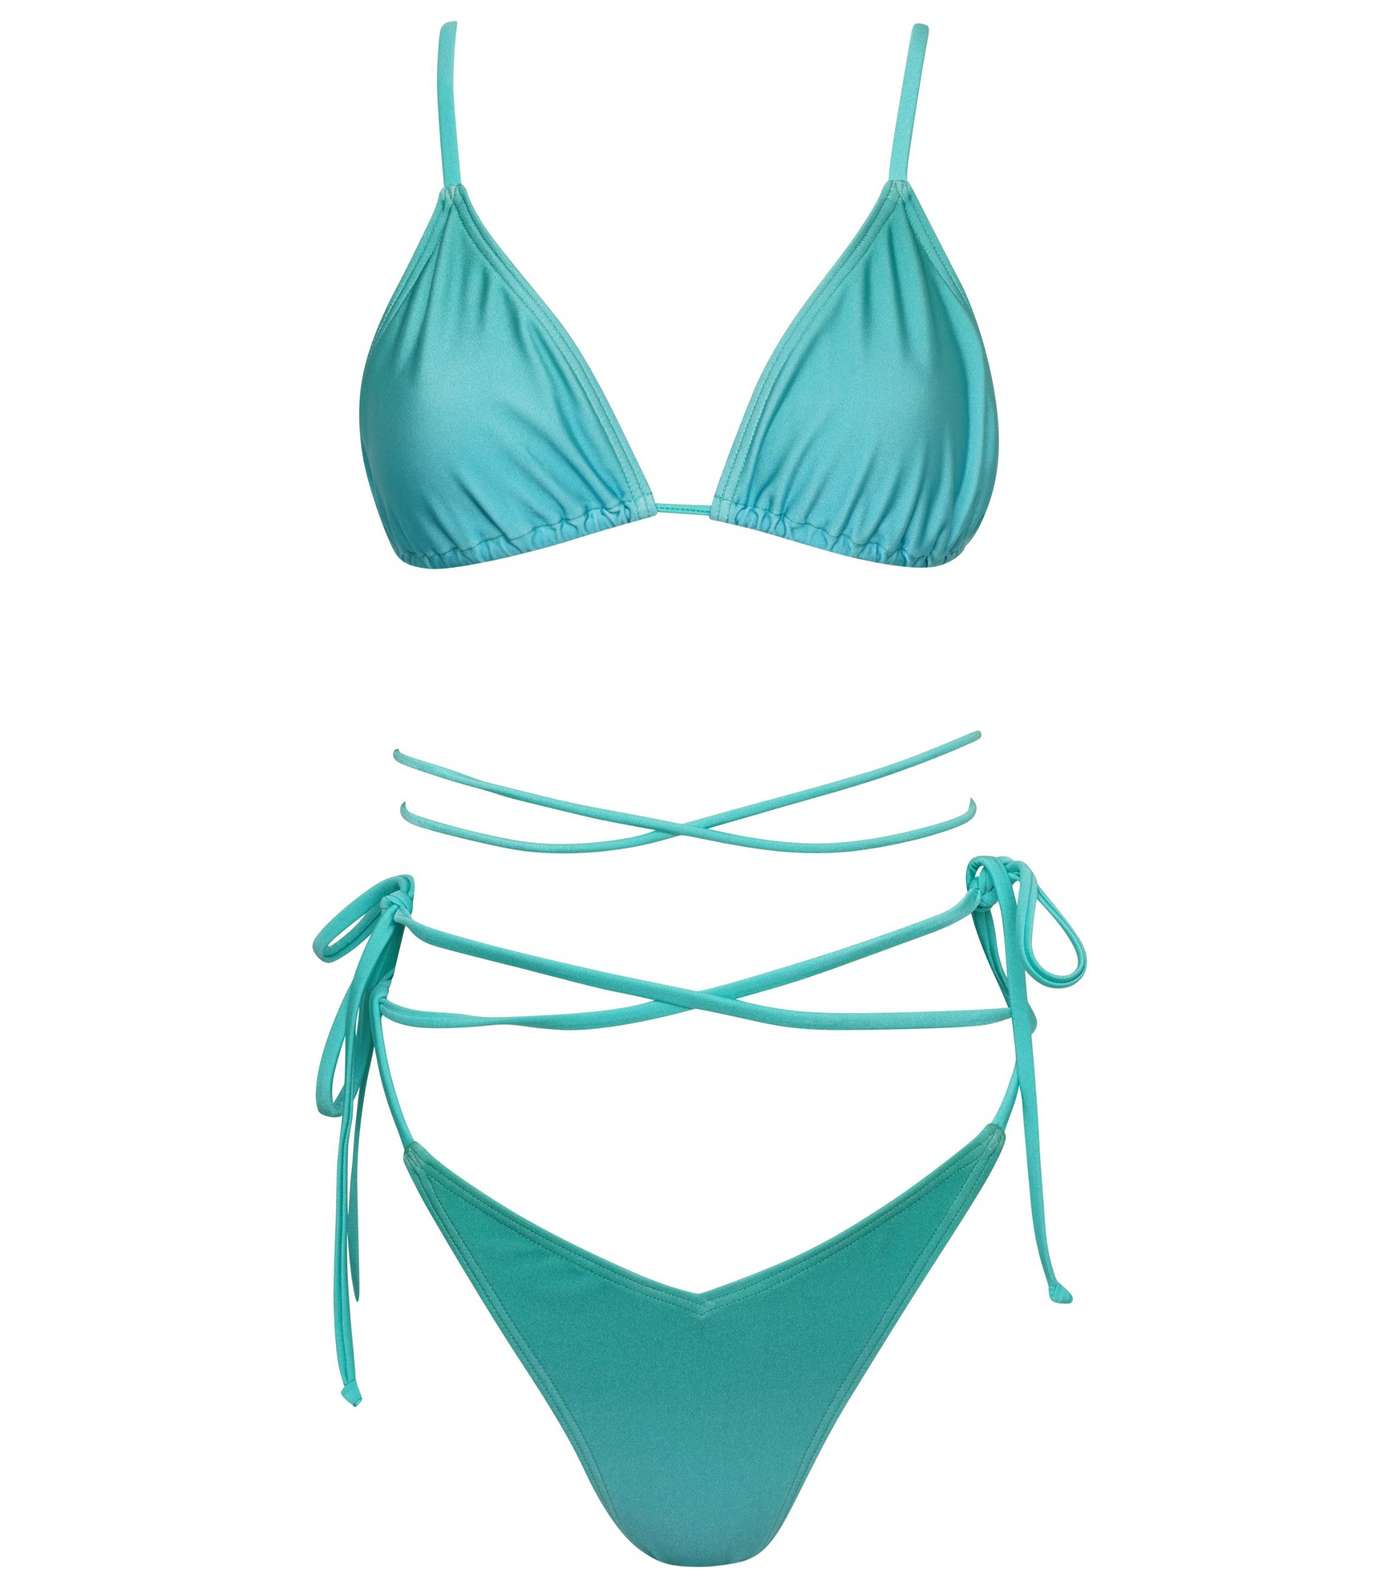 South Beach Bright Blue Strappy Bikini Top and Bottoms Image 6